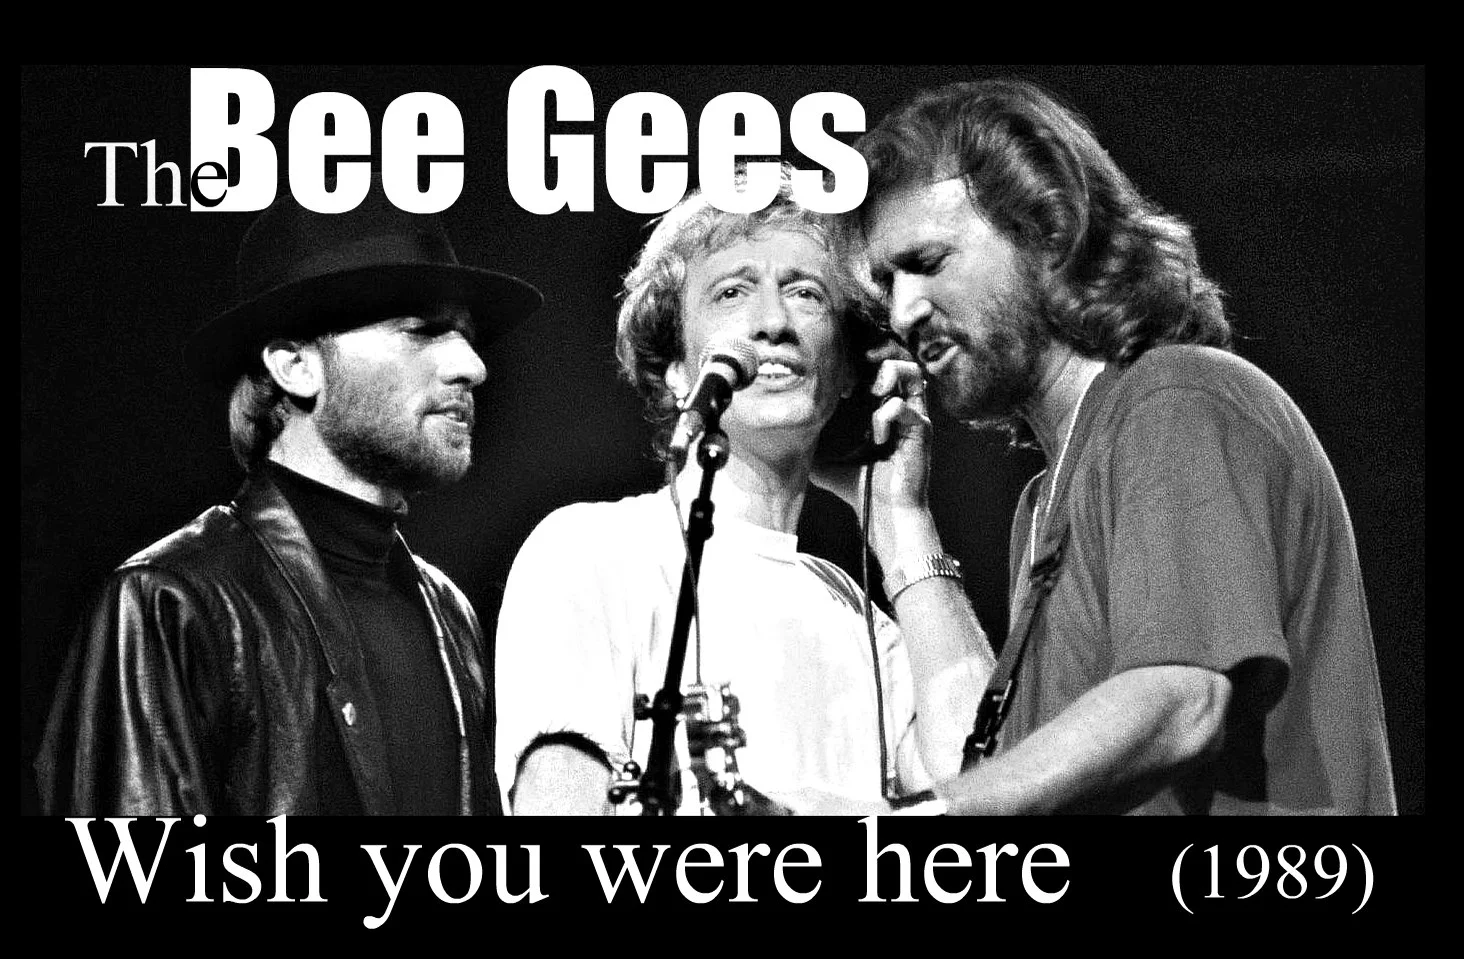 Bee Gees - Wish You Were Here (Tradução) 